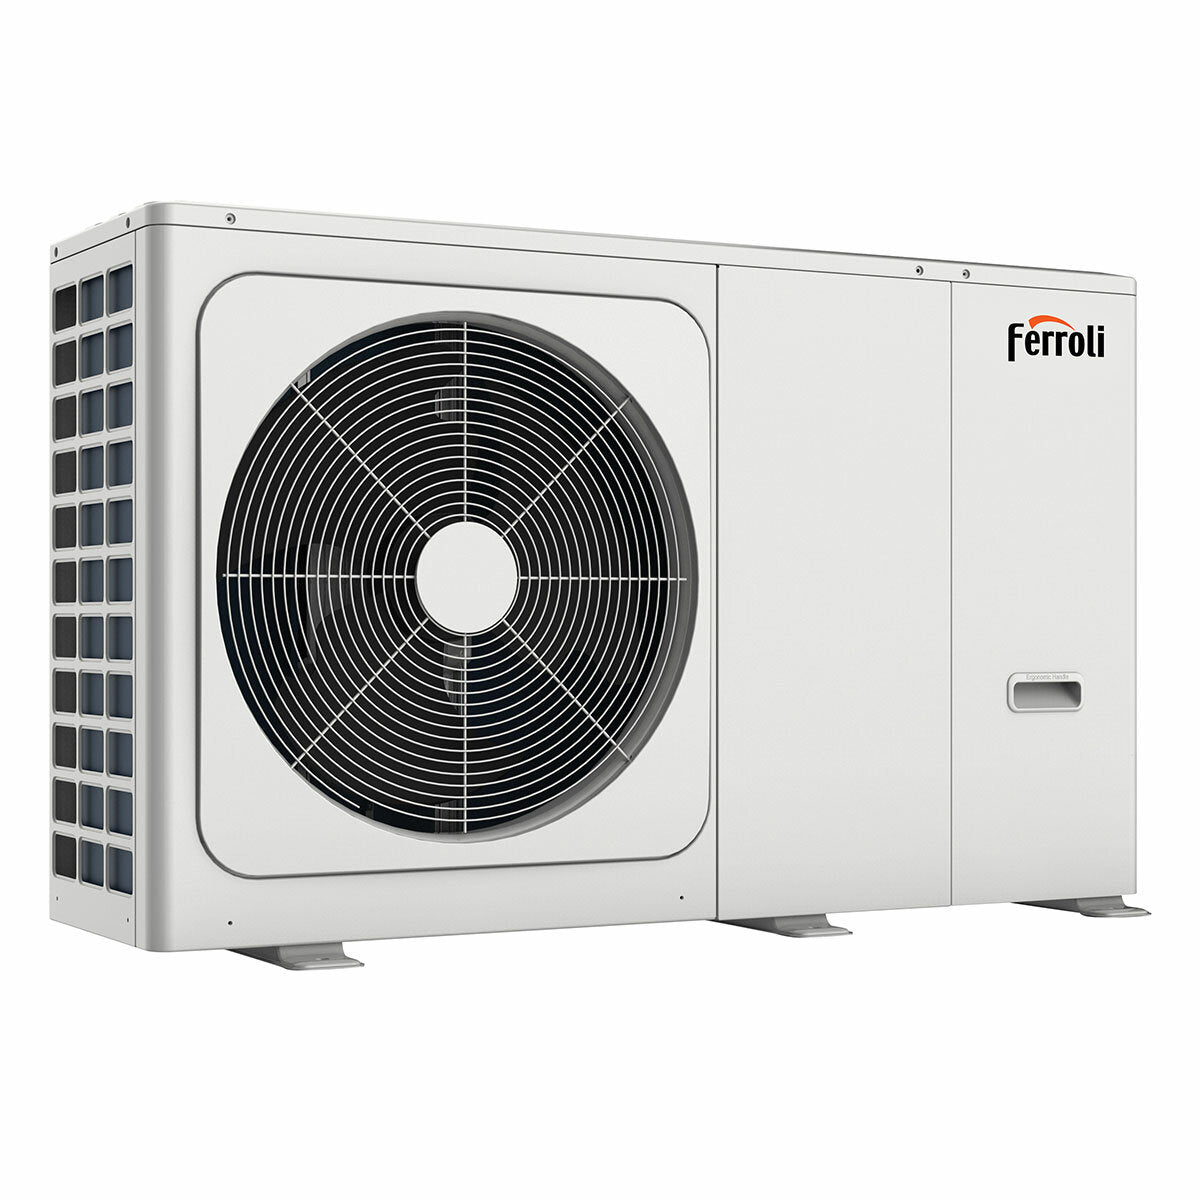 Ferroli Omnia M 3.2 10 kW air-water heat pump monobloc single-phase inverter R32 A++